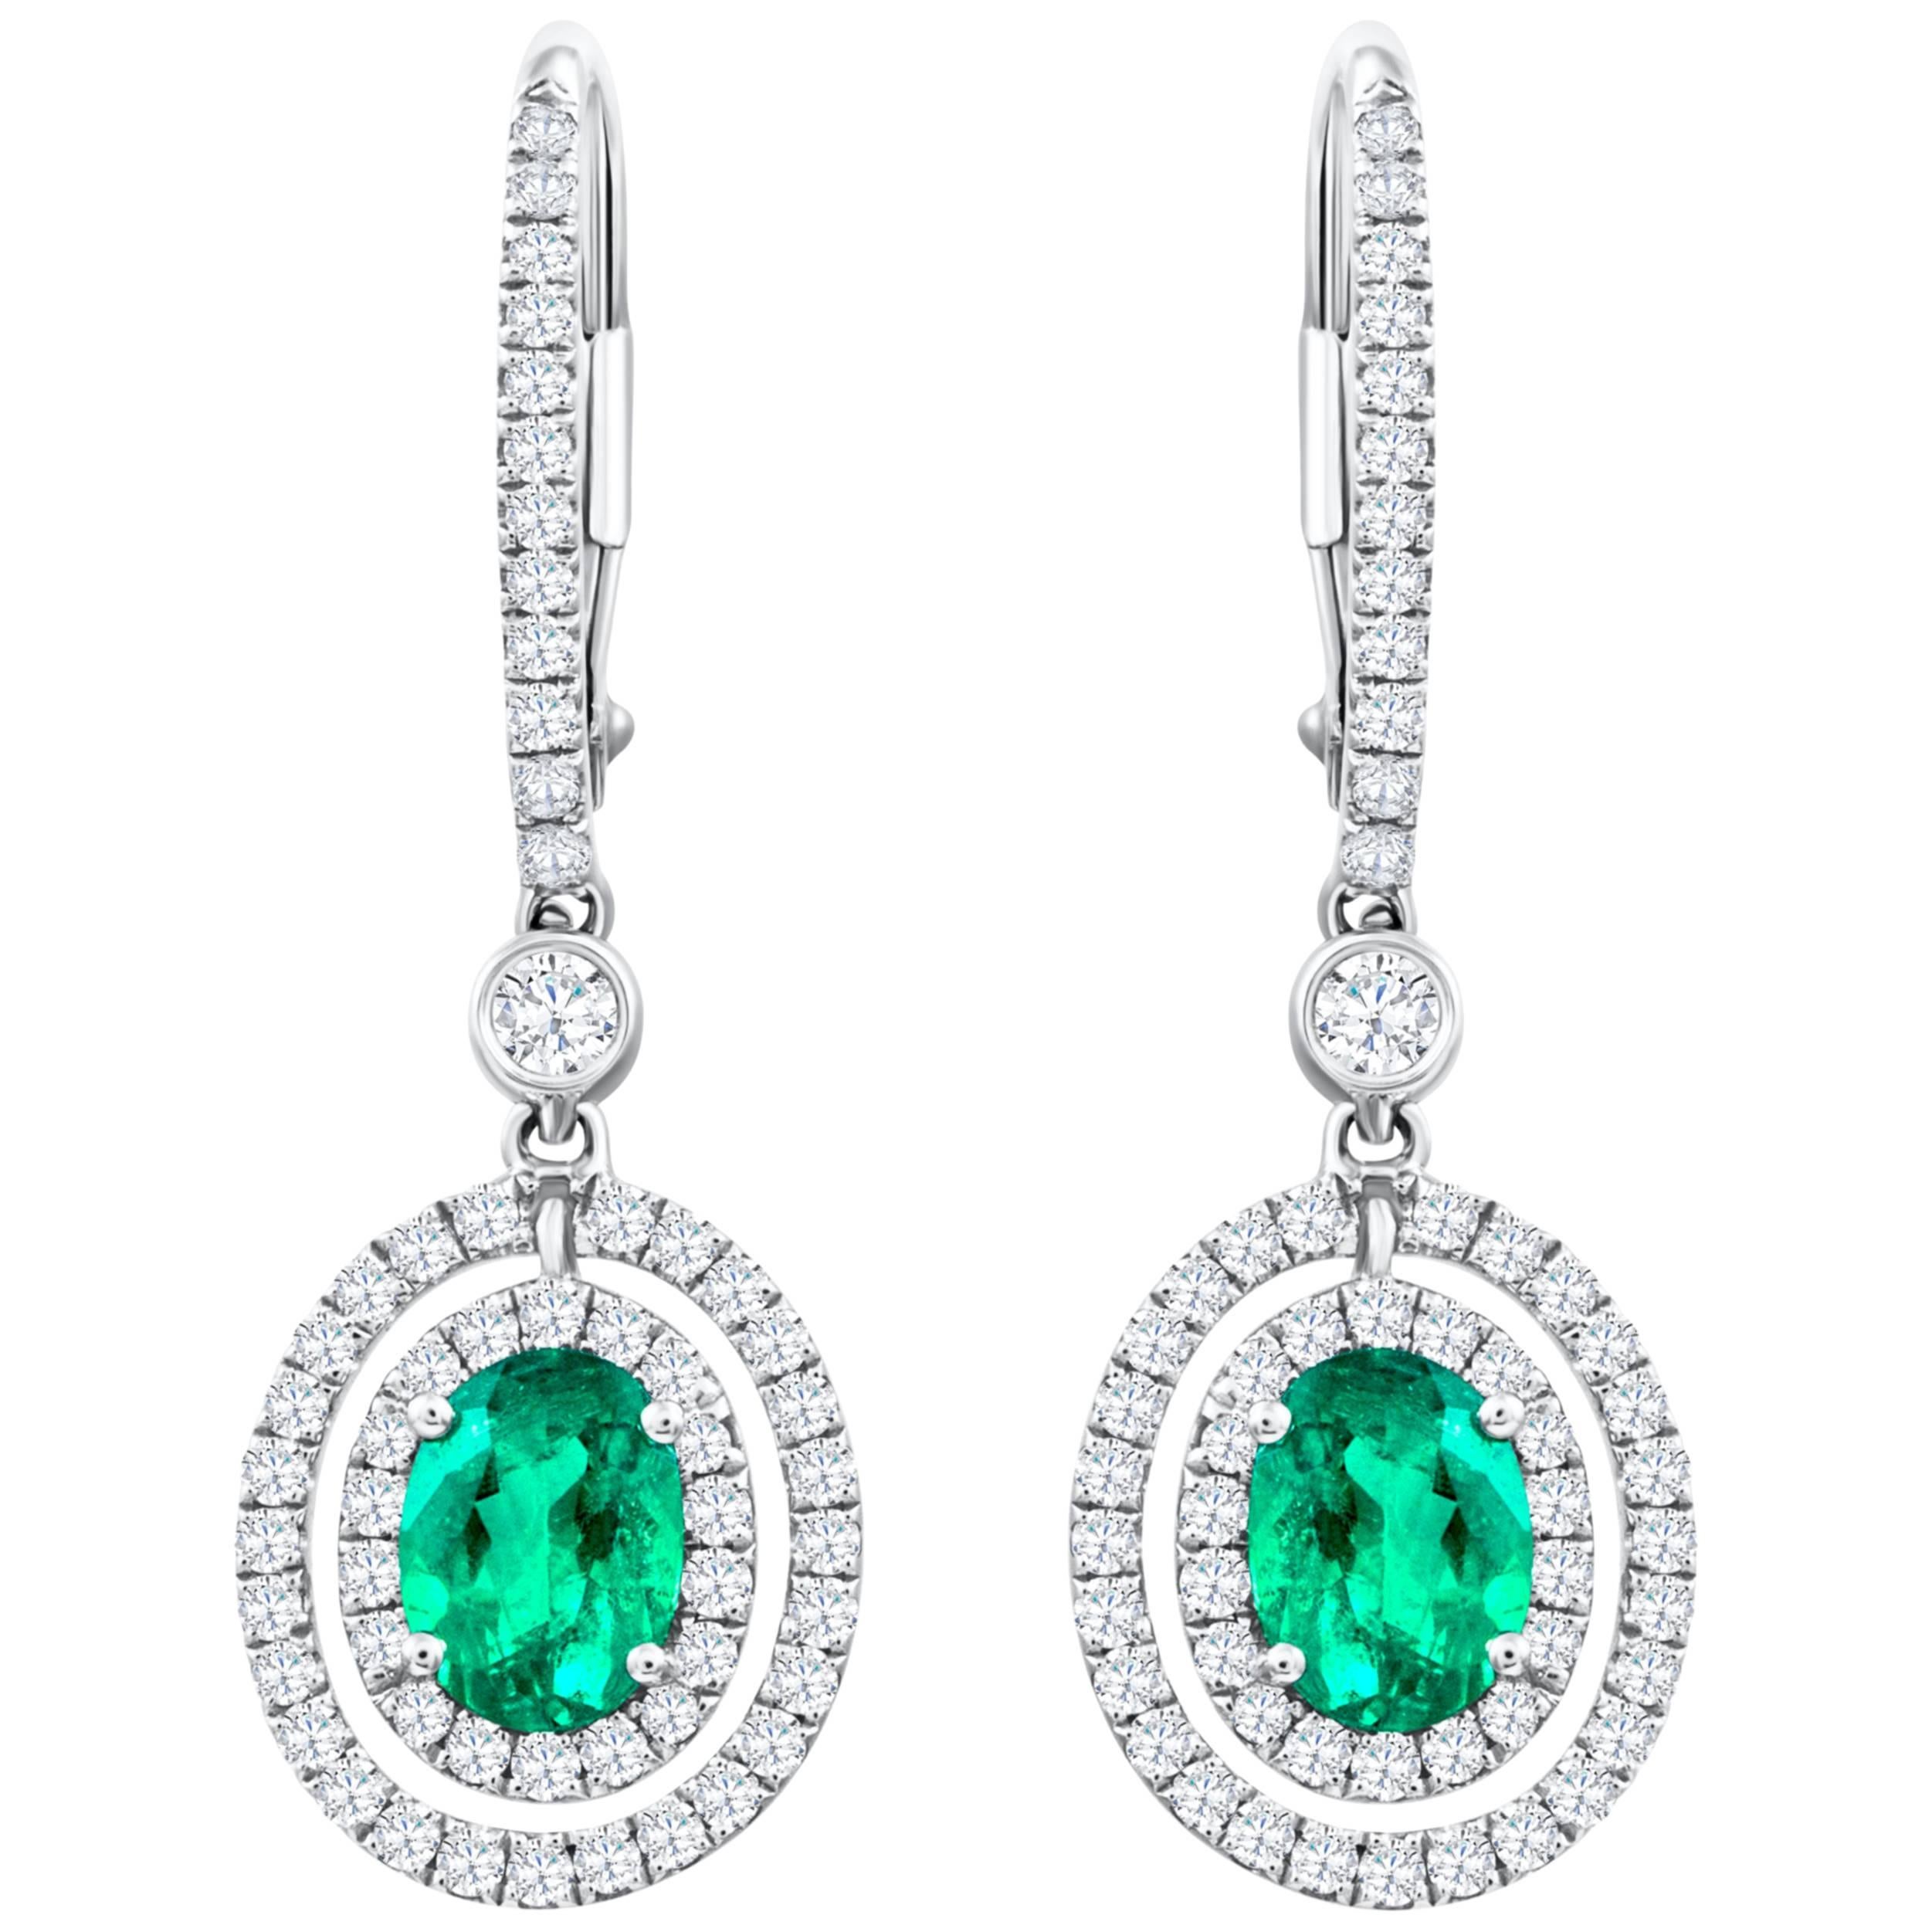 1.01 Carats Total Oval Cut Emerald and Diamond Halo Dangle Earrings